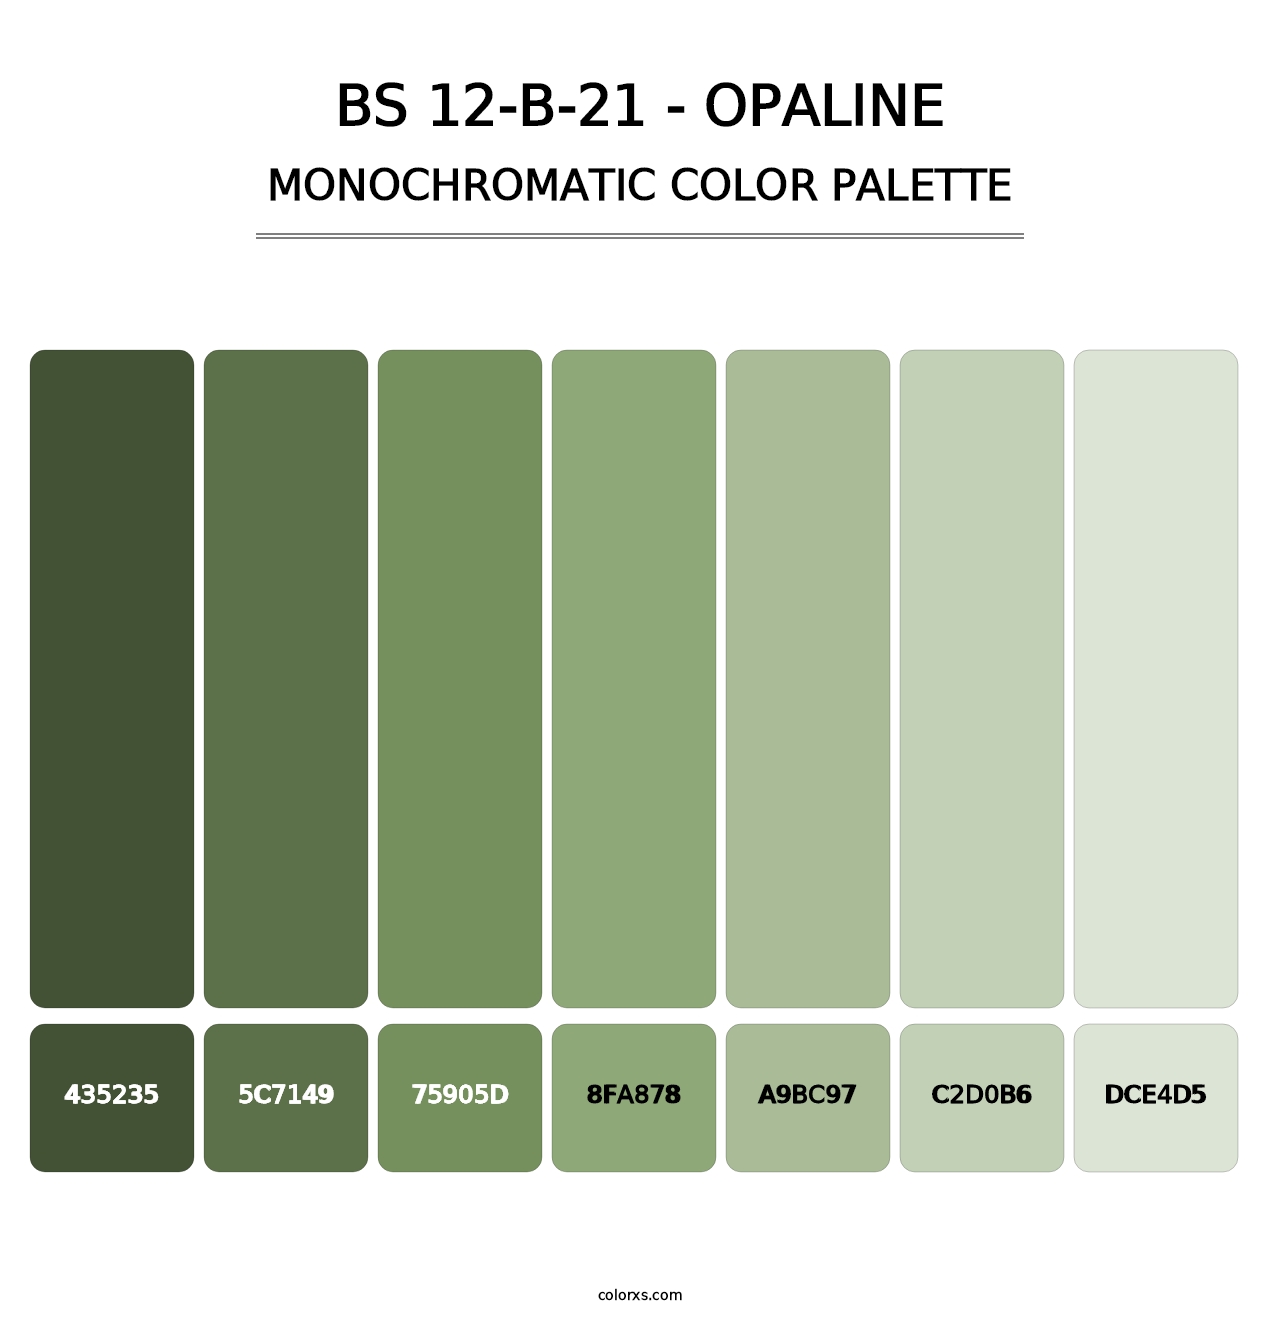 BS 12-B-21 - Opaline - Monochromatic Color Palette